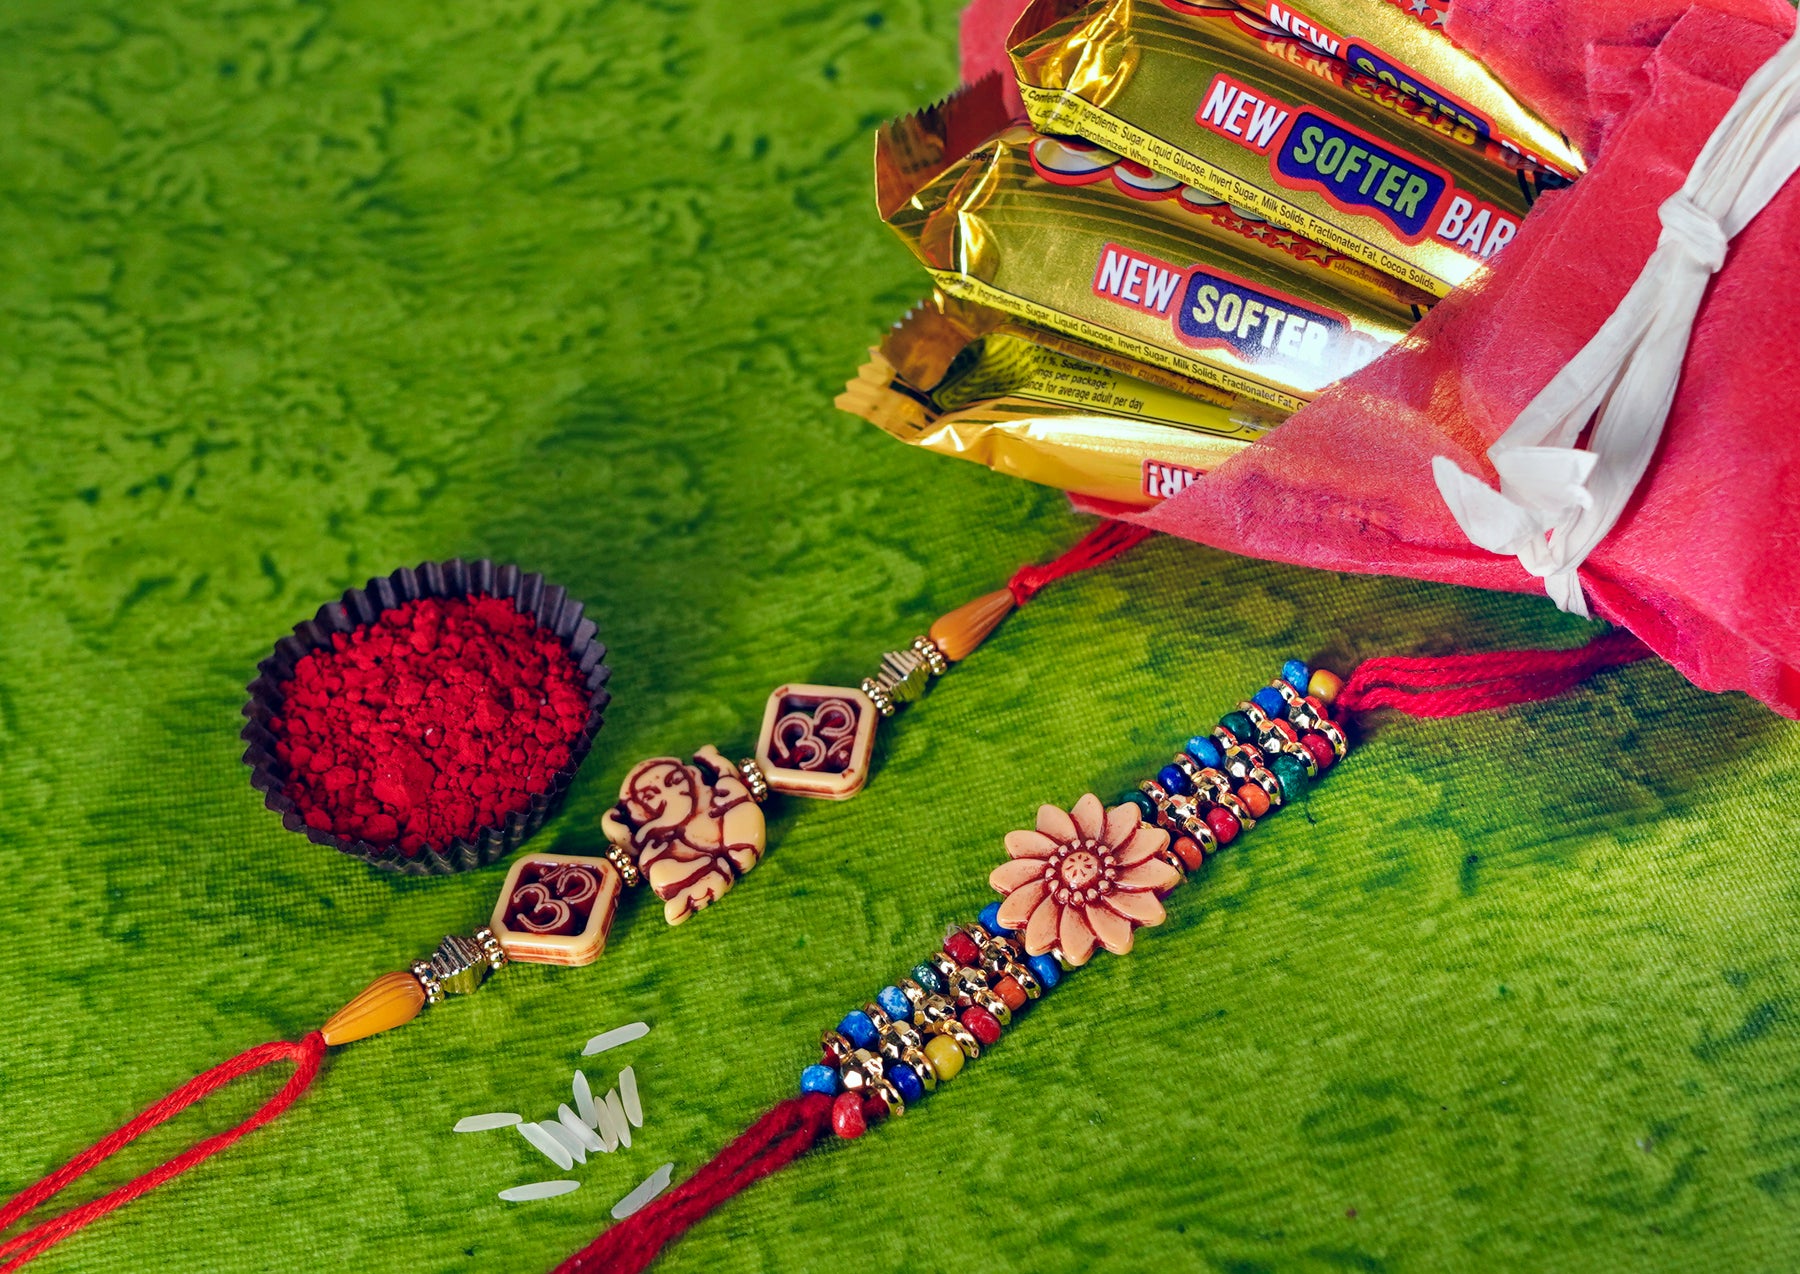 Beads Rakhi - Ganesha Rakhi & Beads Rakhi Floral With 5 Star chocolate gift wrapped